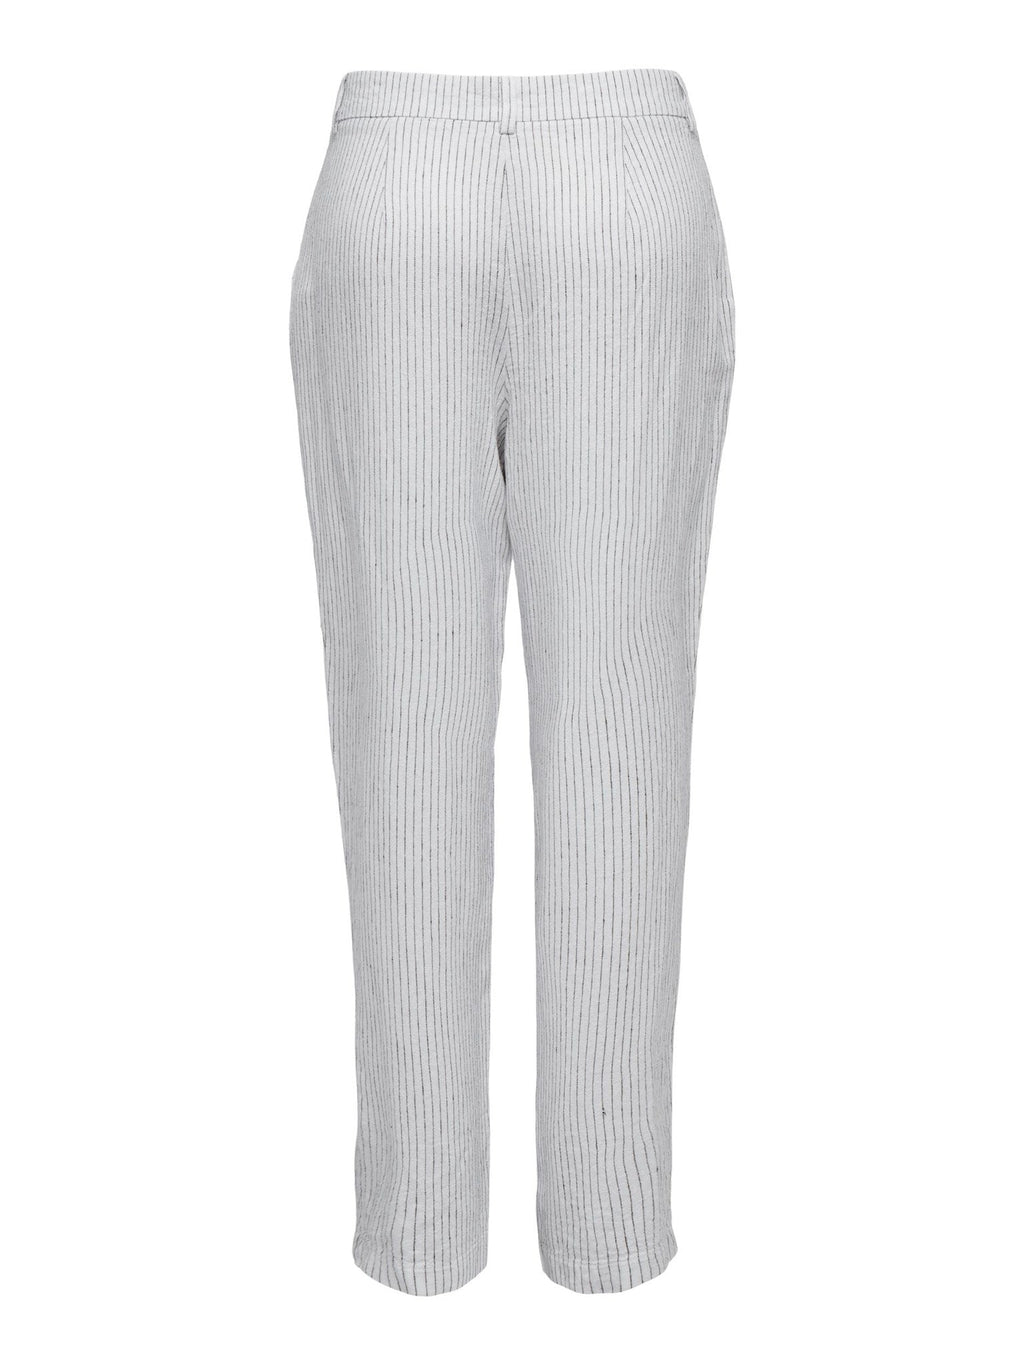 Pantaloni gessati di lino olga - bianco brillante